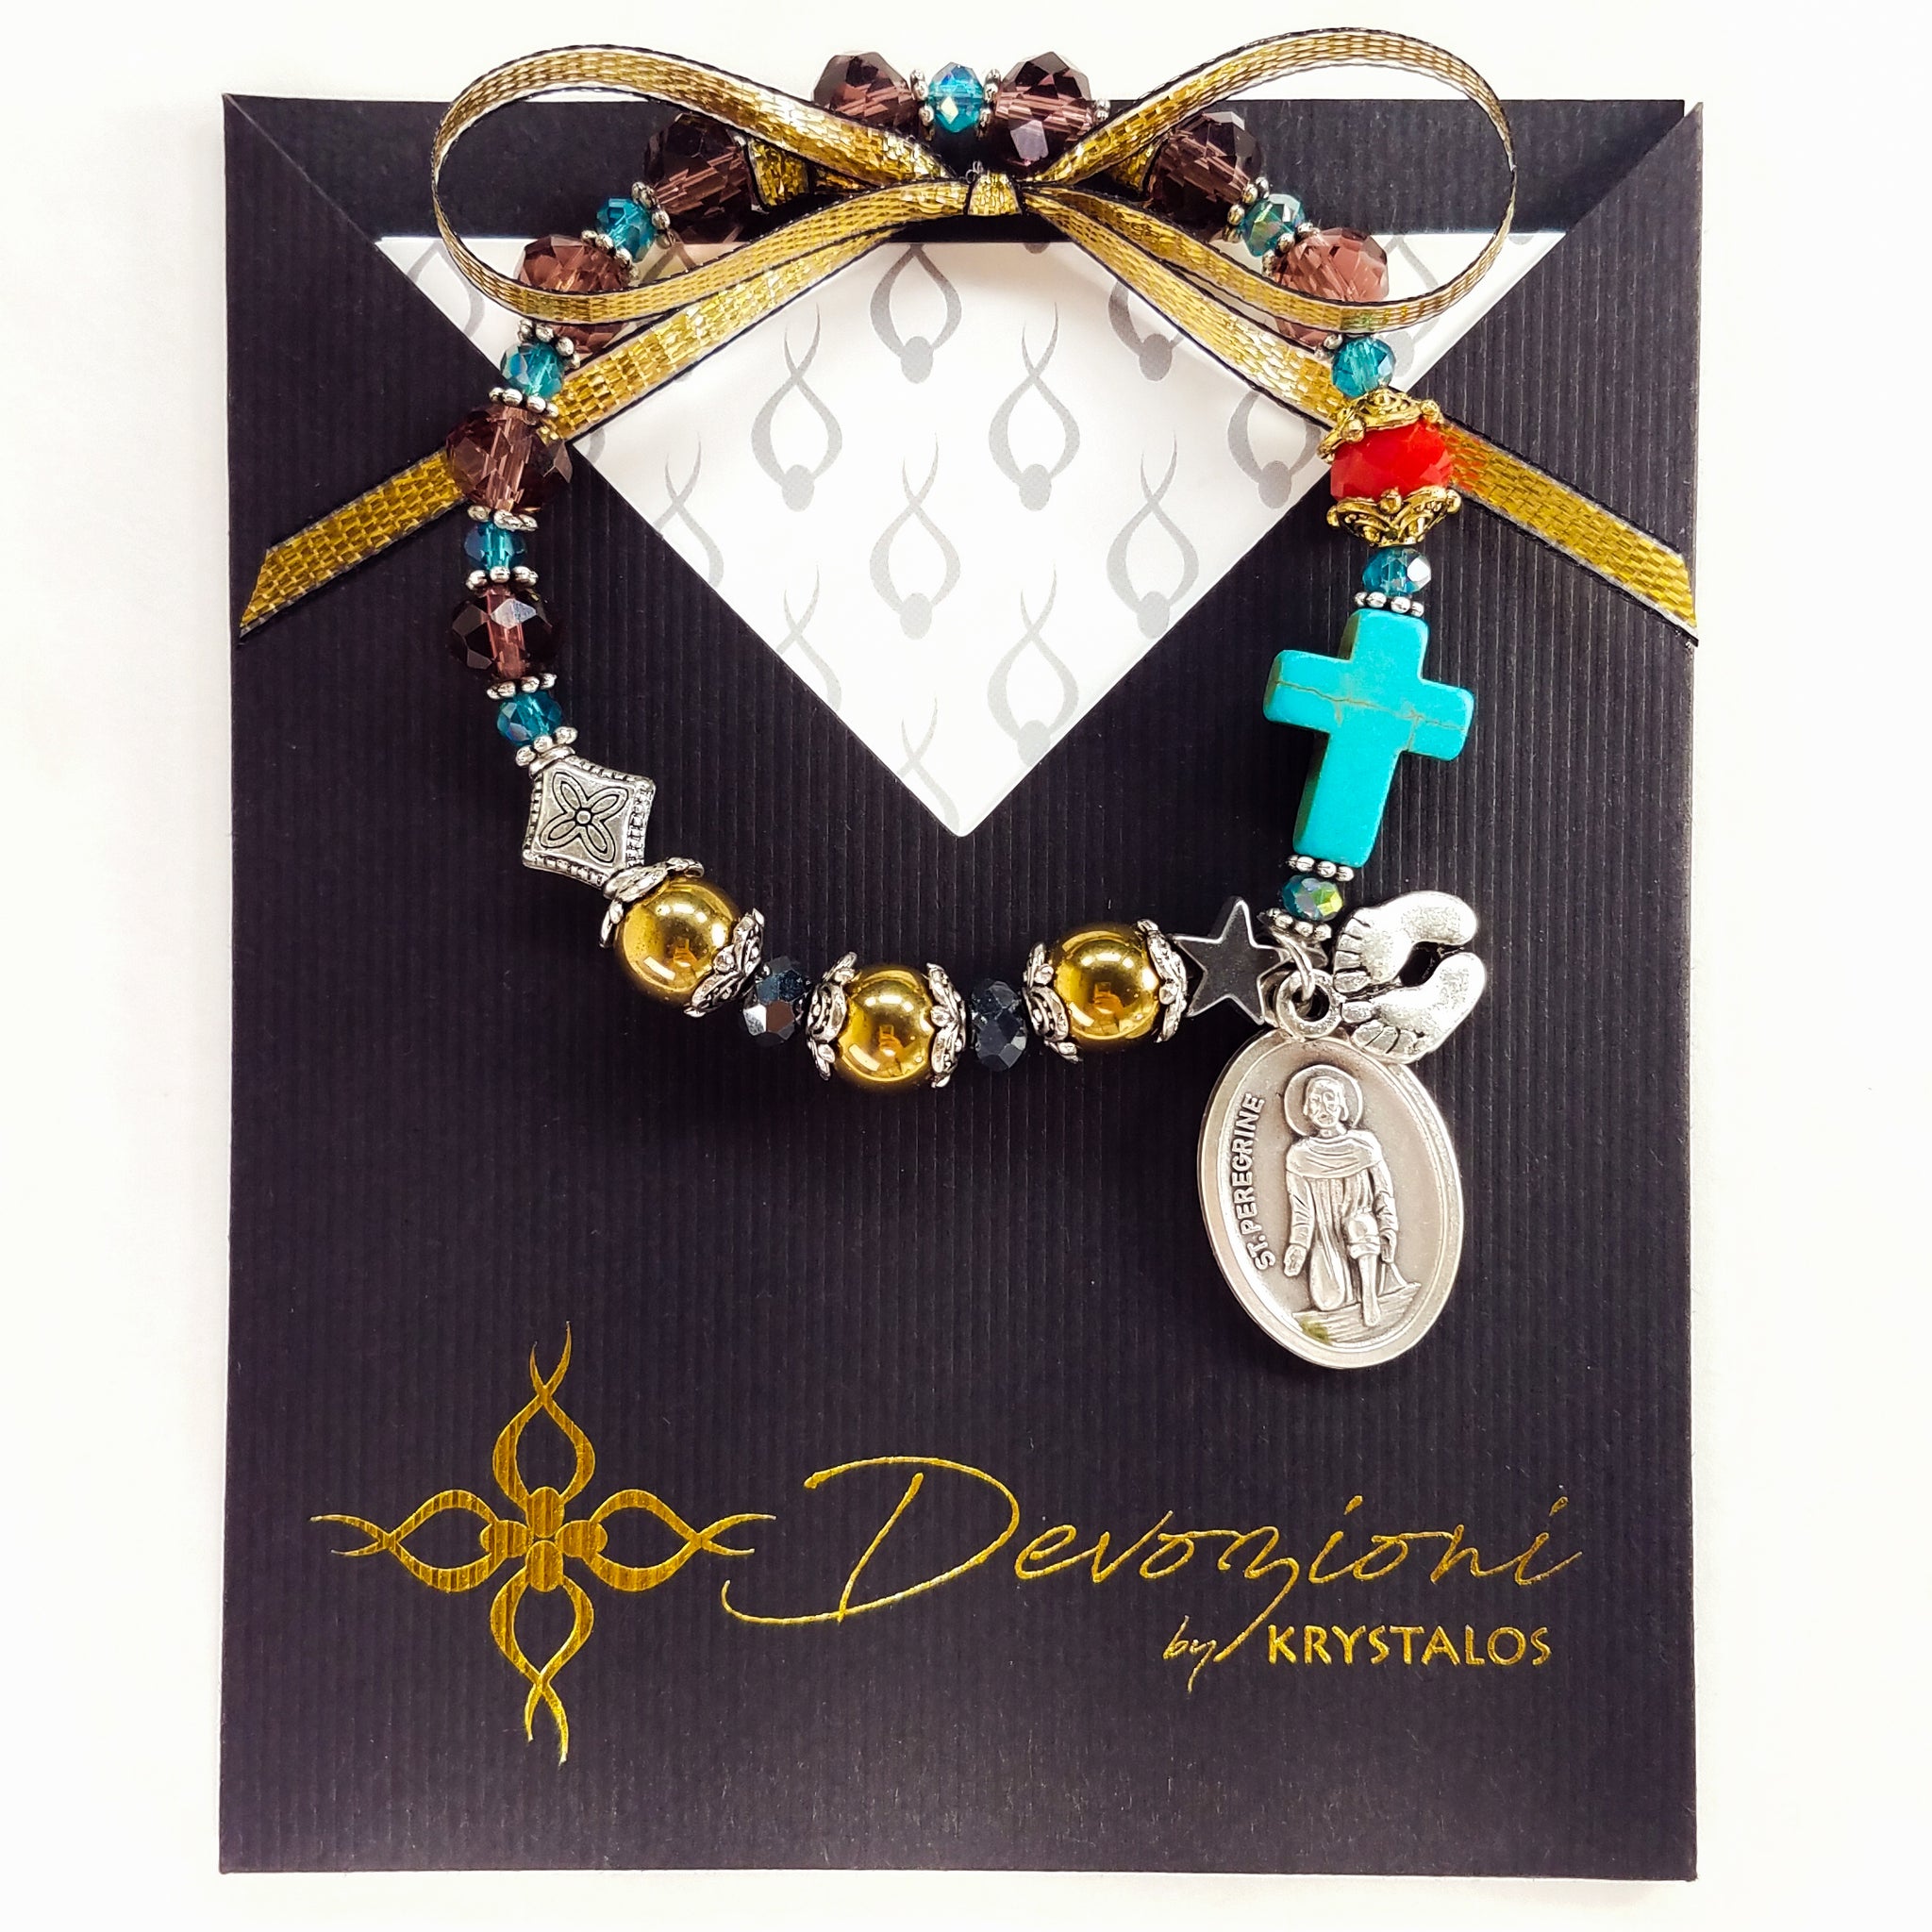 Saint Peregrine - DEVOZIONI Rosary Bracelet